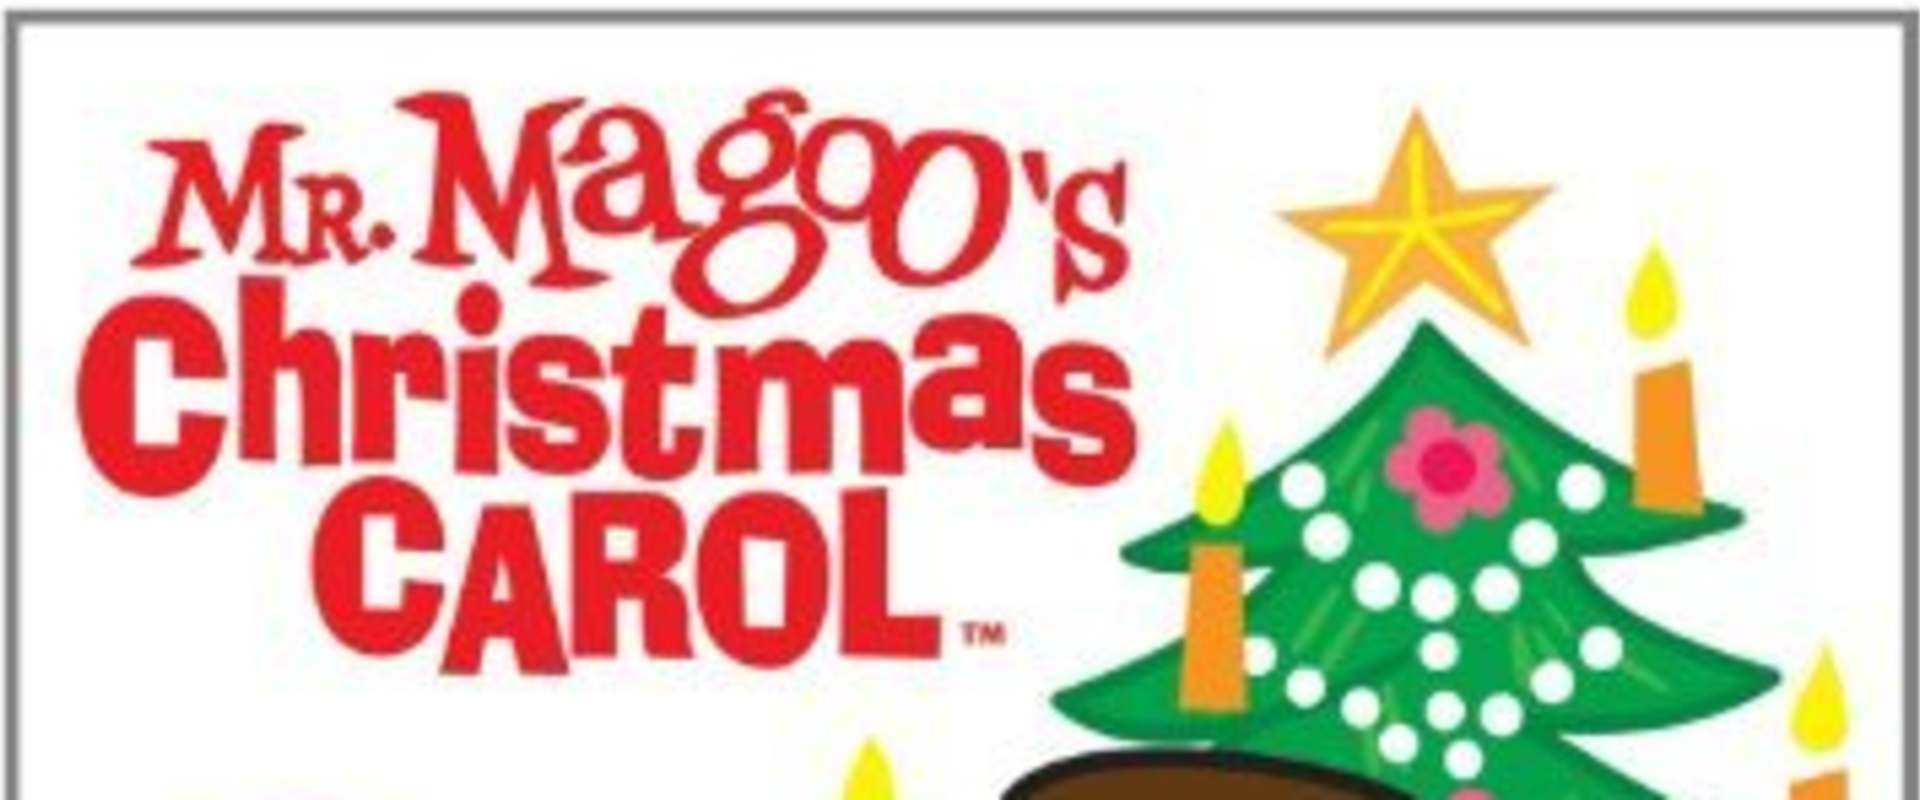 Mister Magoo's Christmas Carol background 2